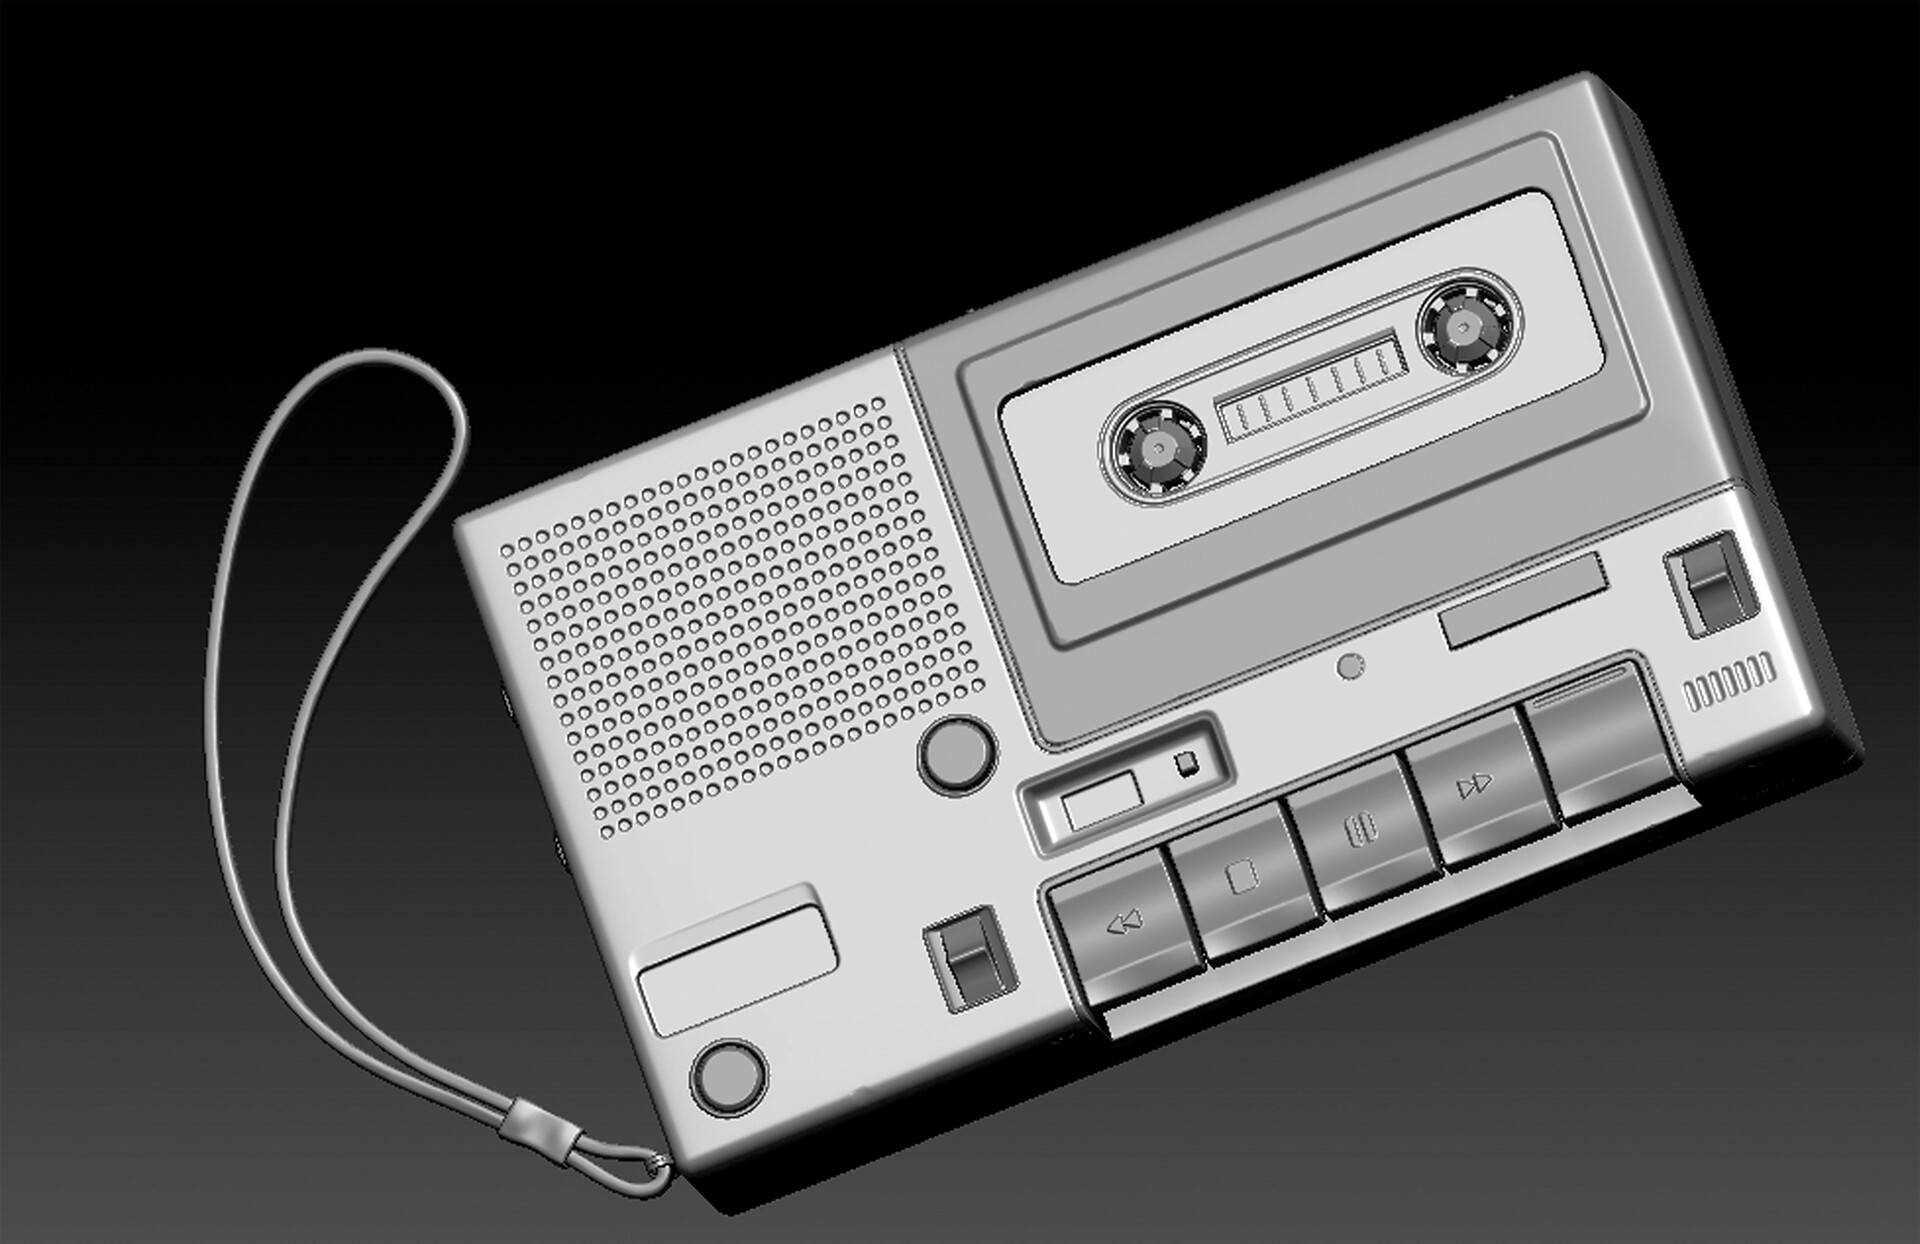 Radio coche cassette - Prop Art